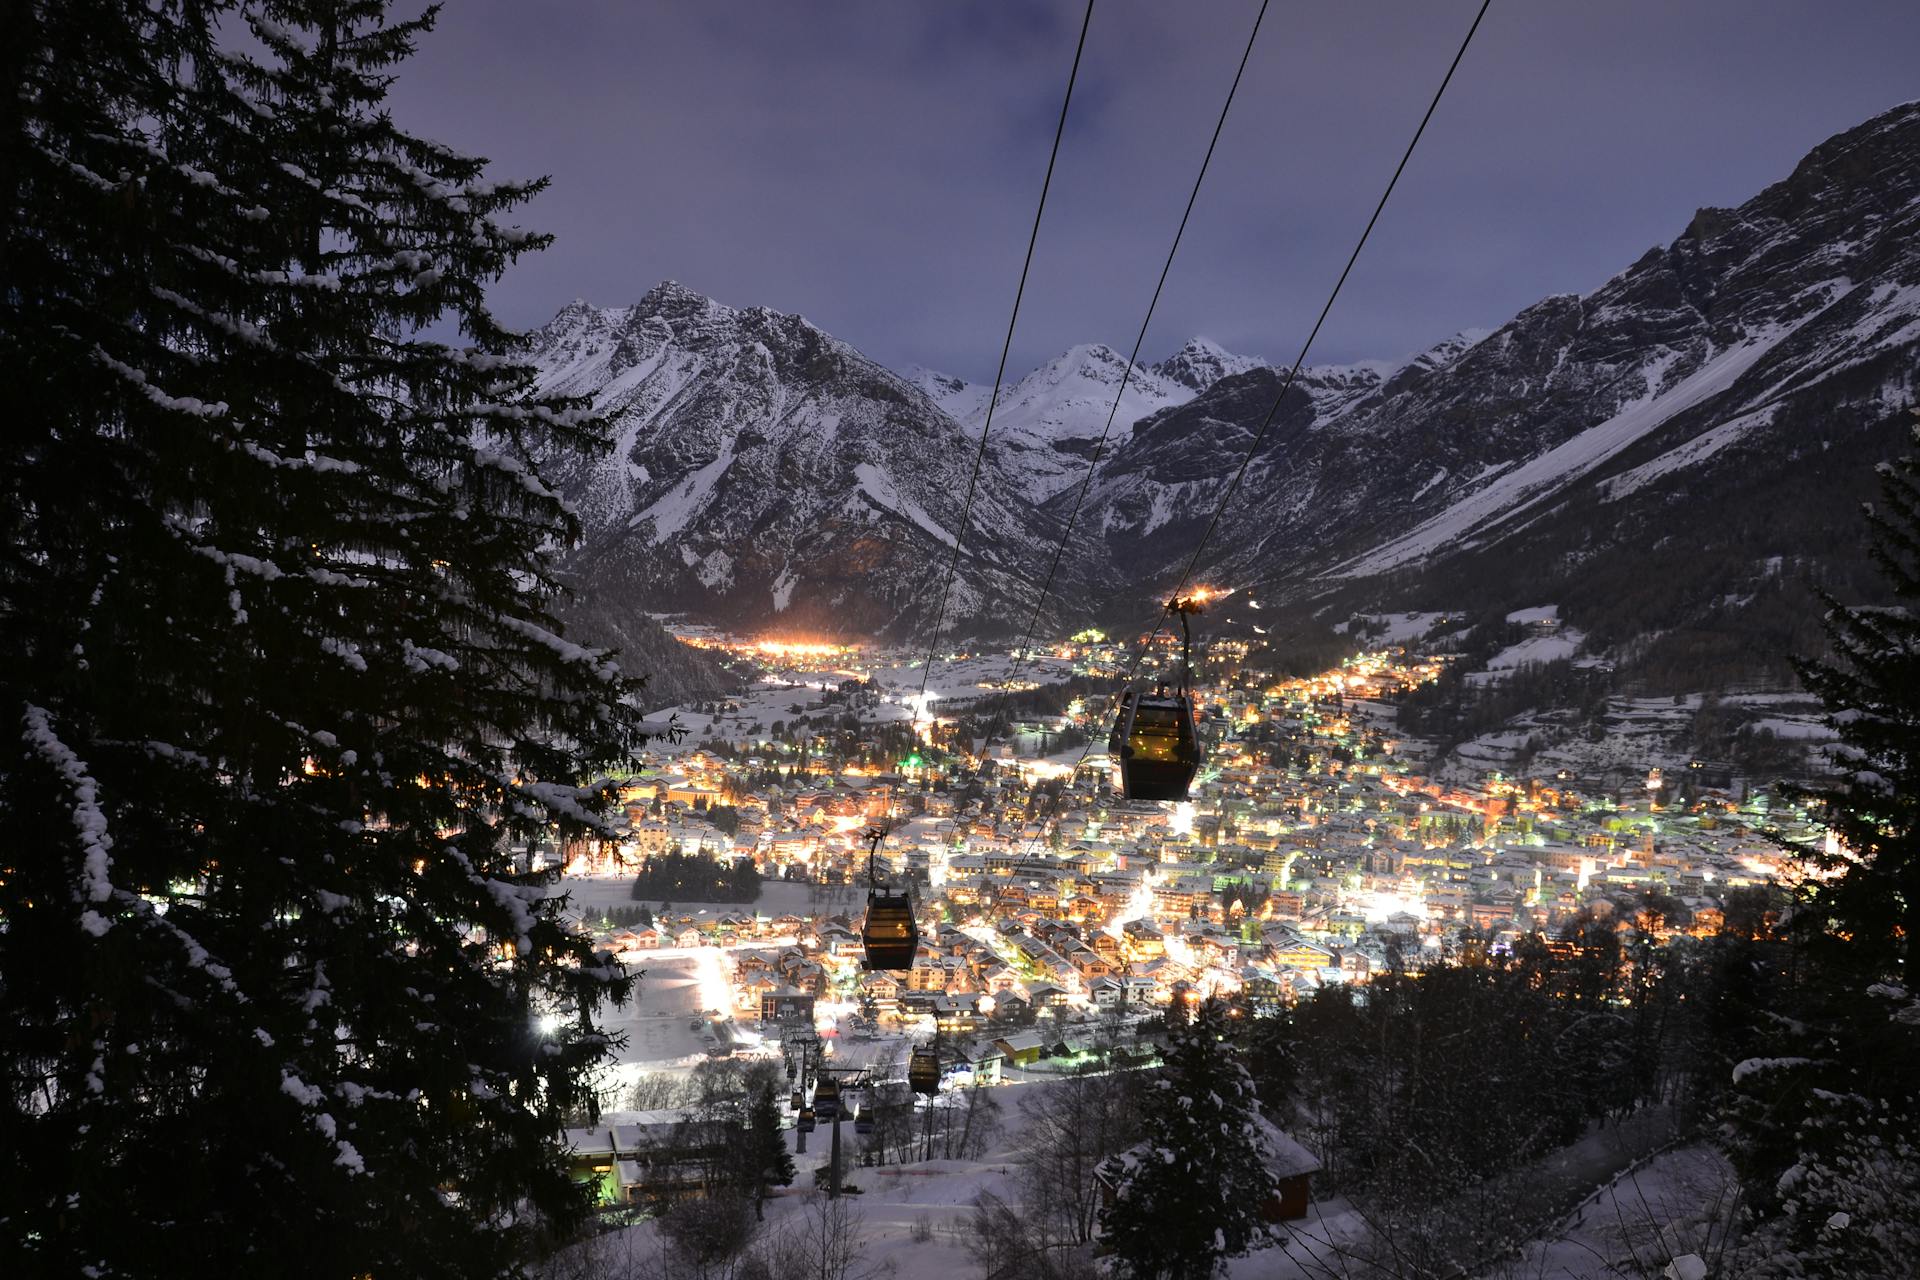 Bormio holiday ski resort lit up by lights at night